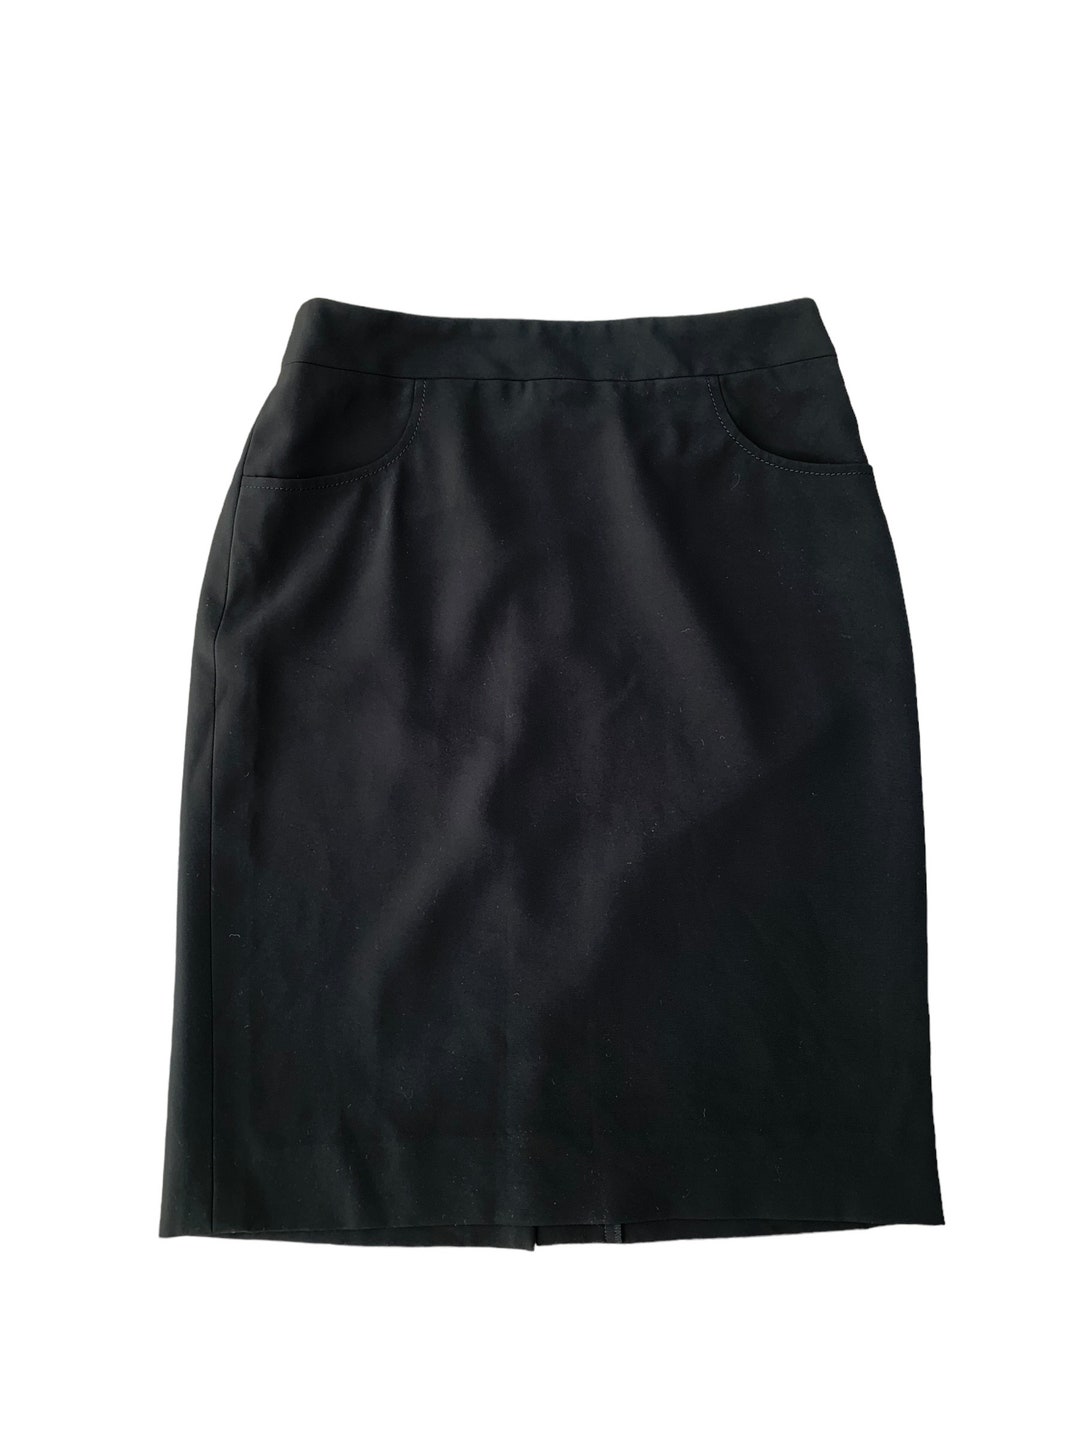 Chanel Uniform Black Skirt - Etsy